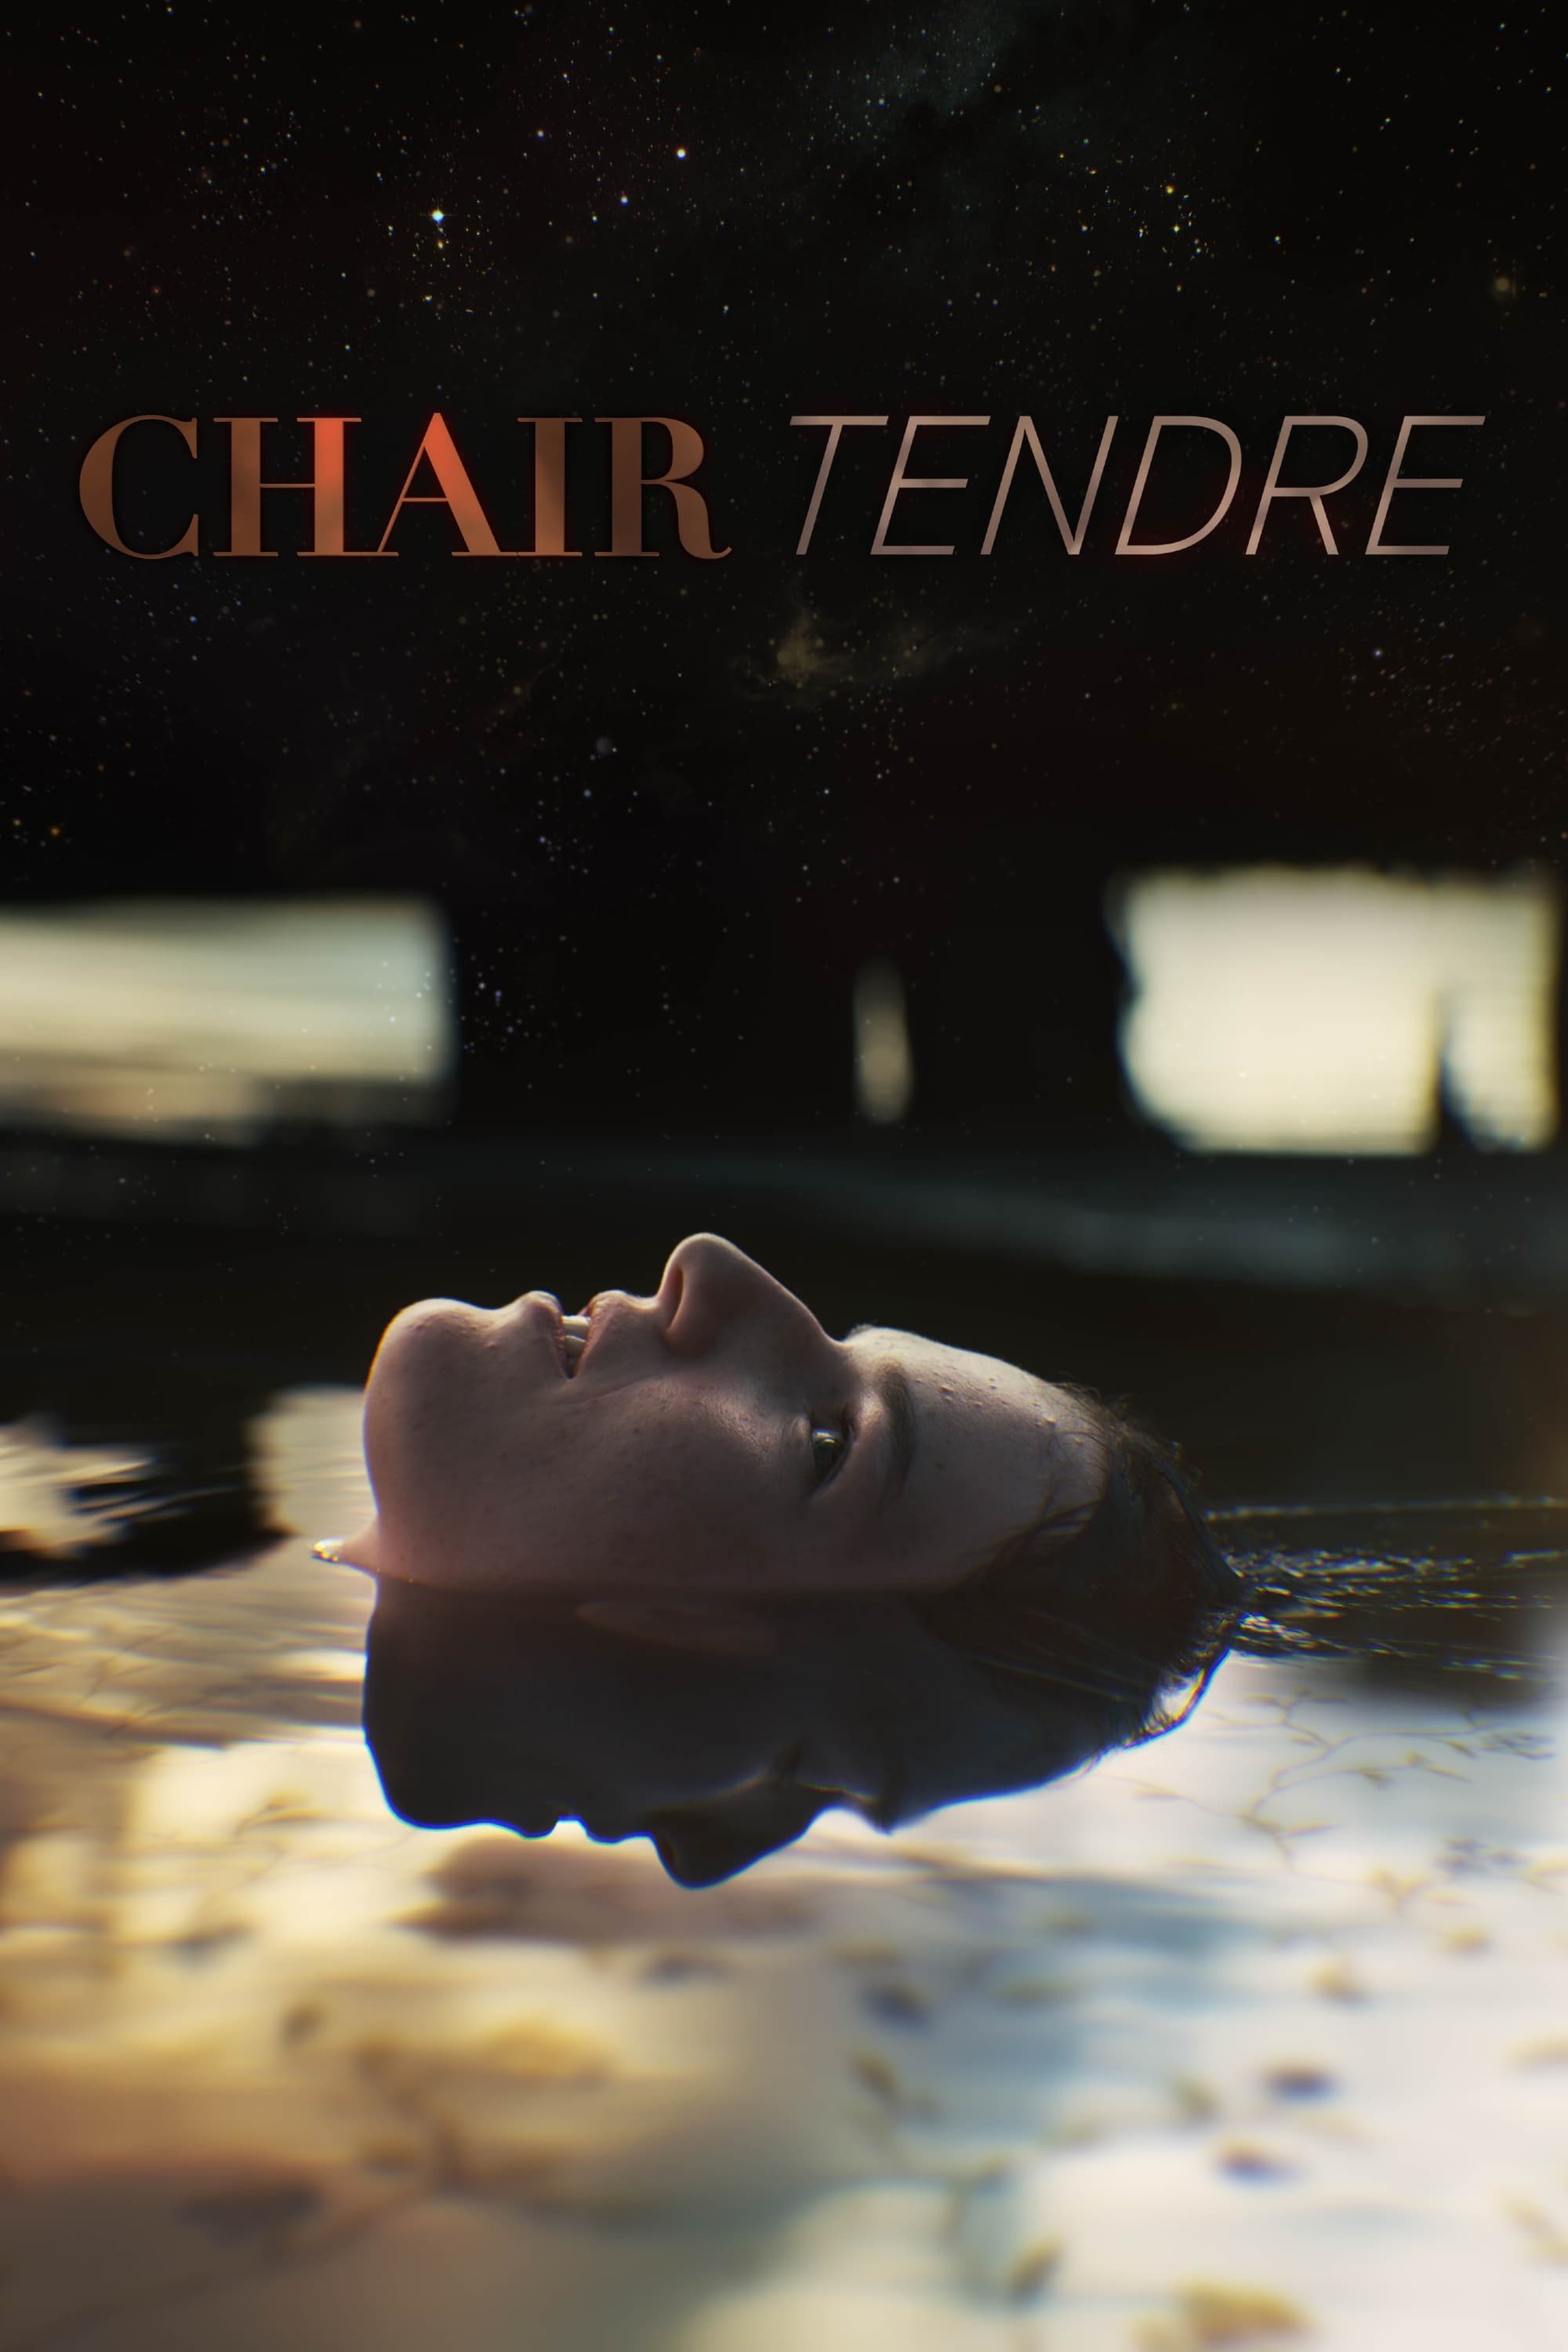 Chair tendre - Série TV 2022